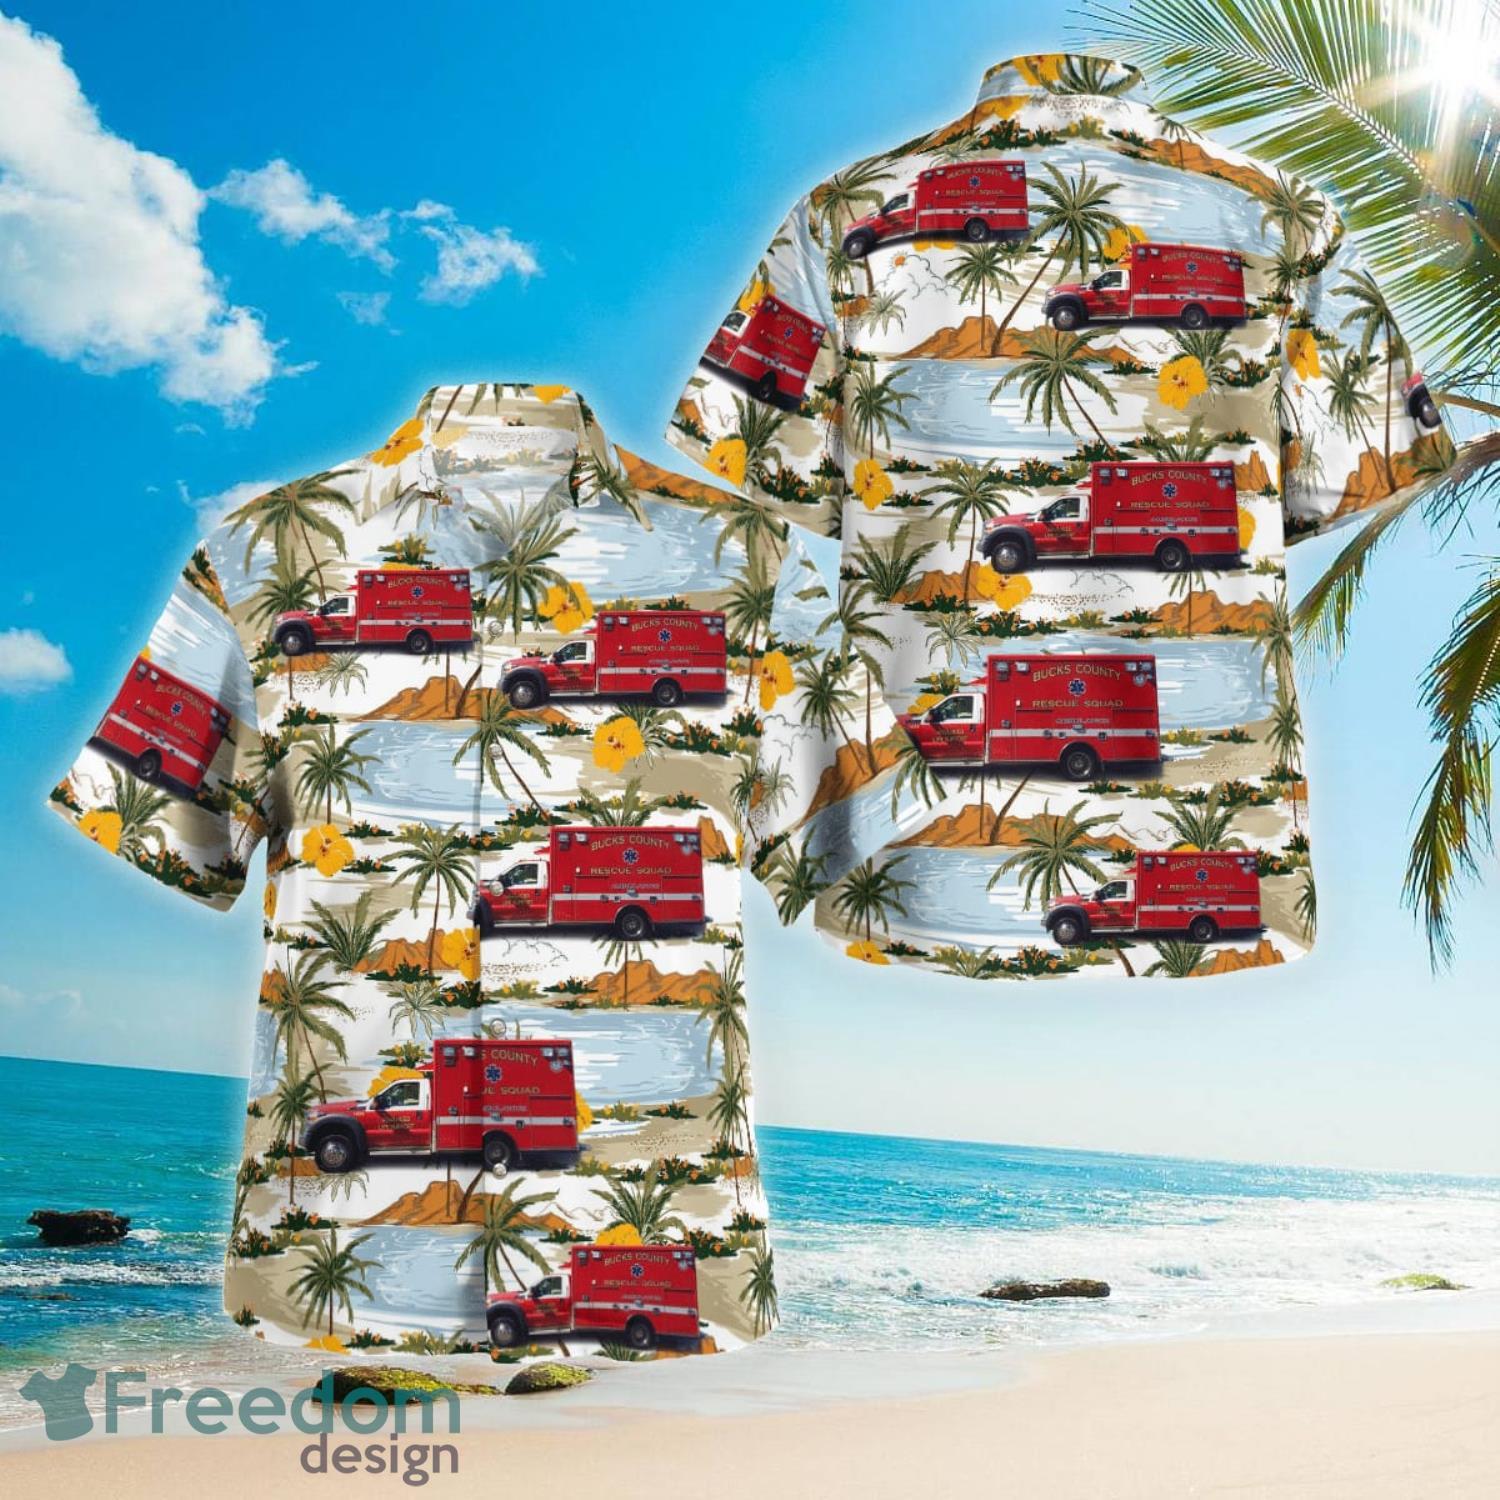 FDNY Fire Marshals Beach Summer Gift Coconut Pattern Hawaiian Shirt